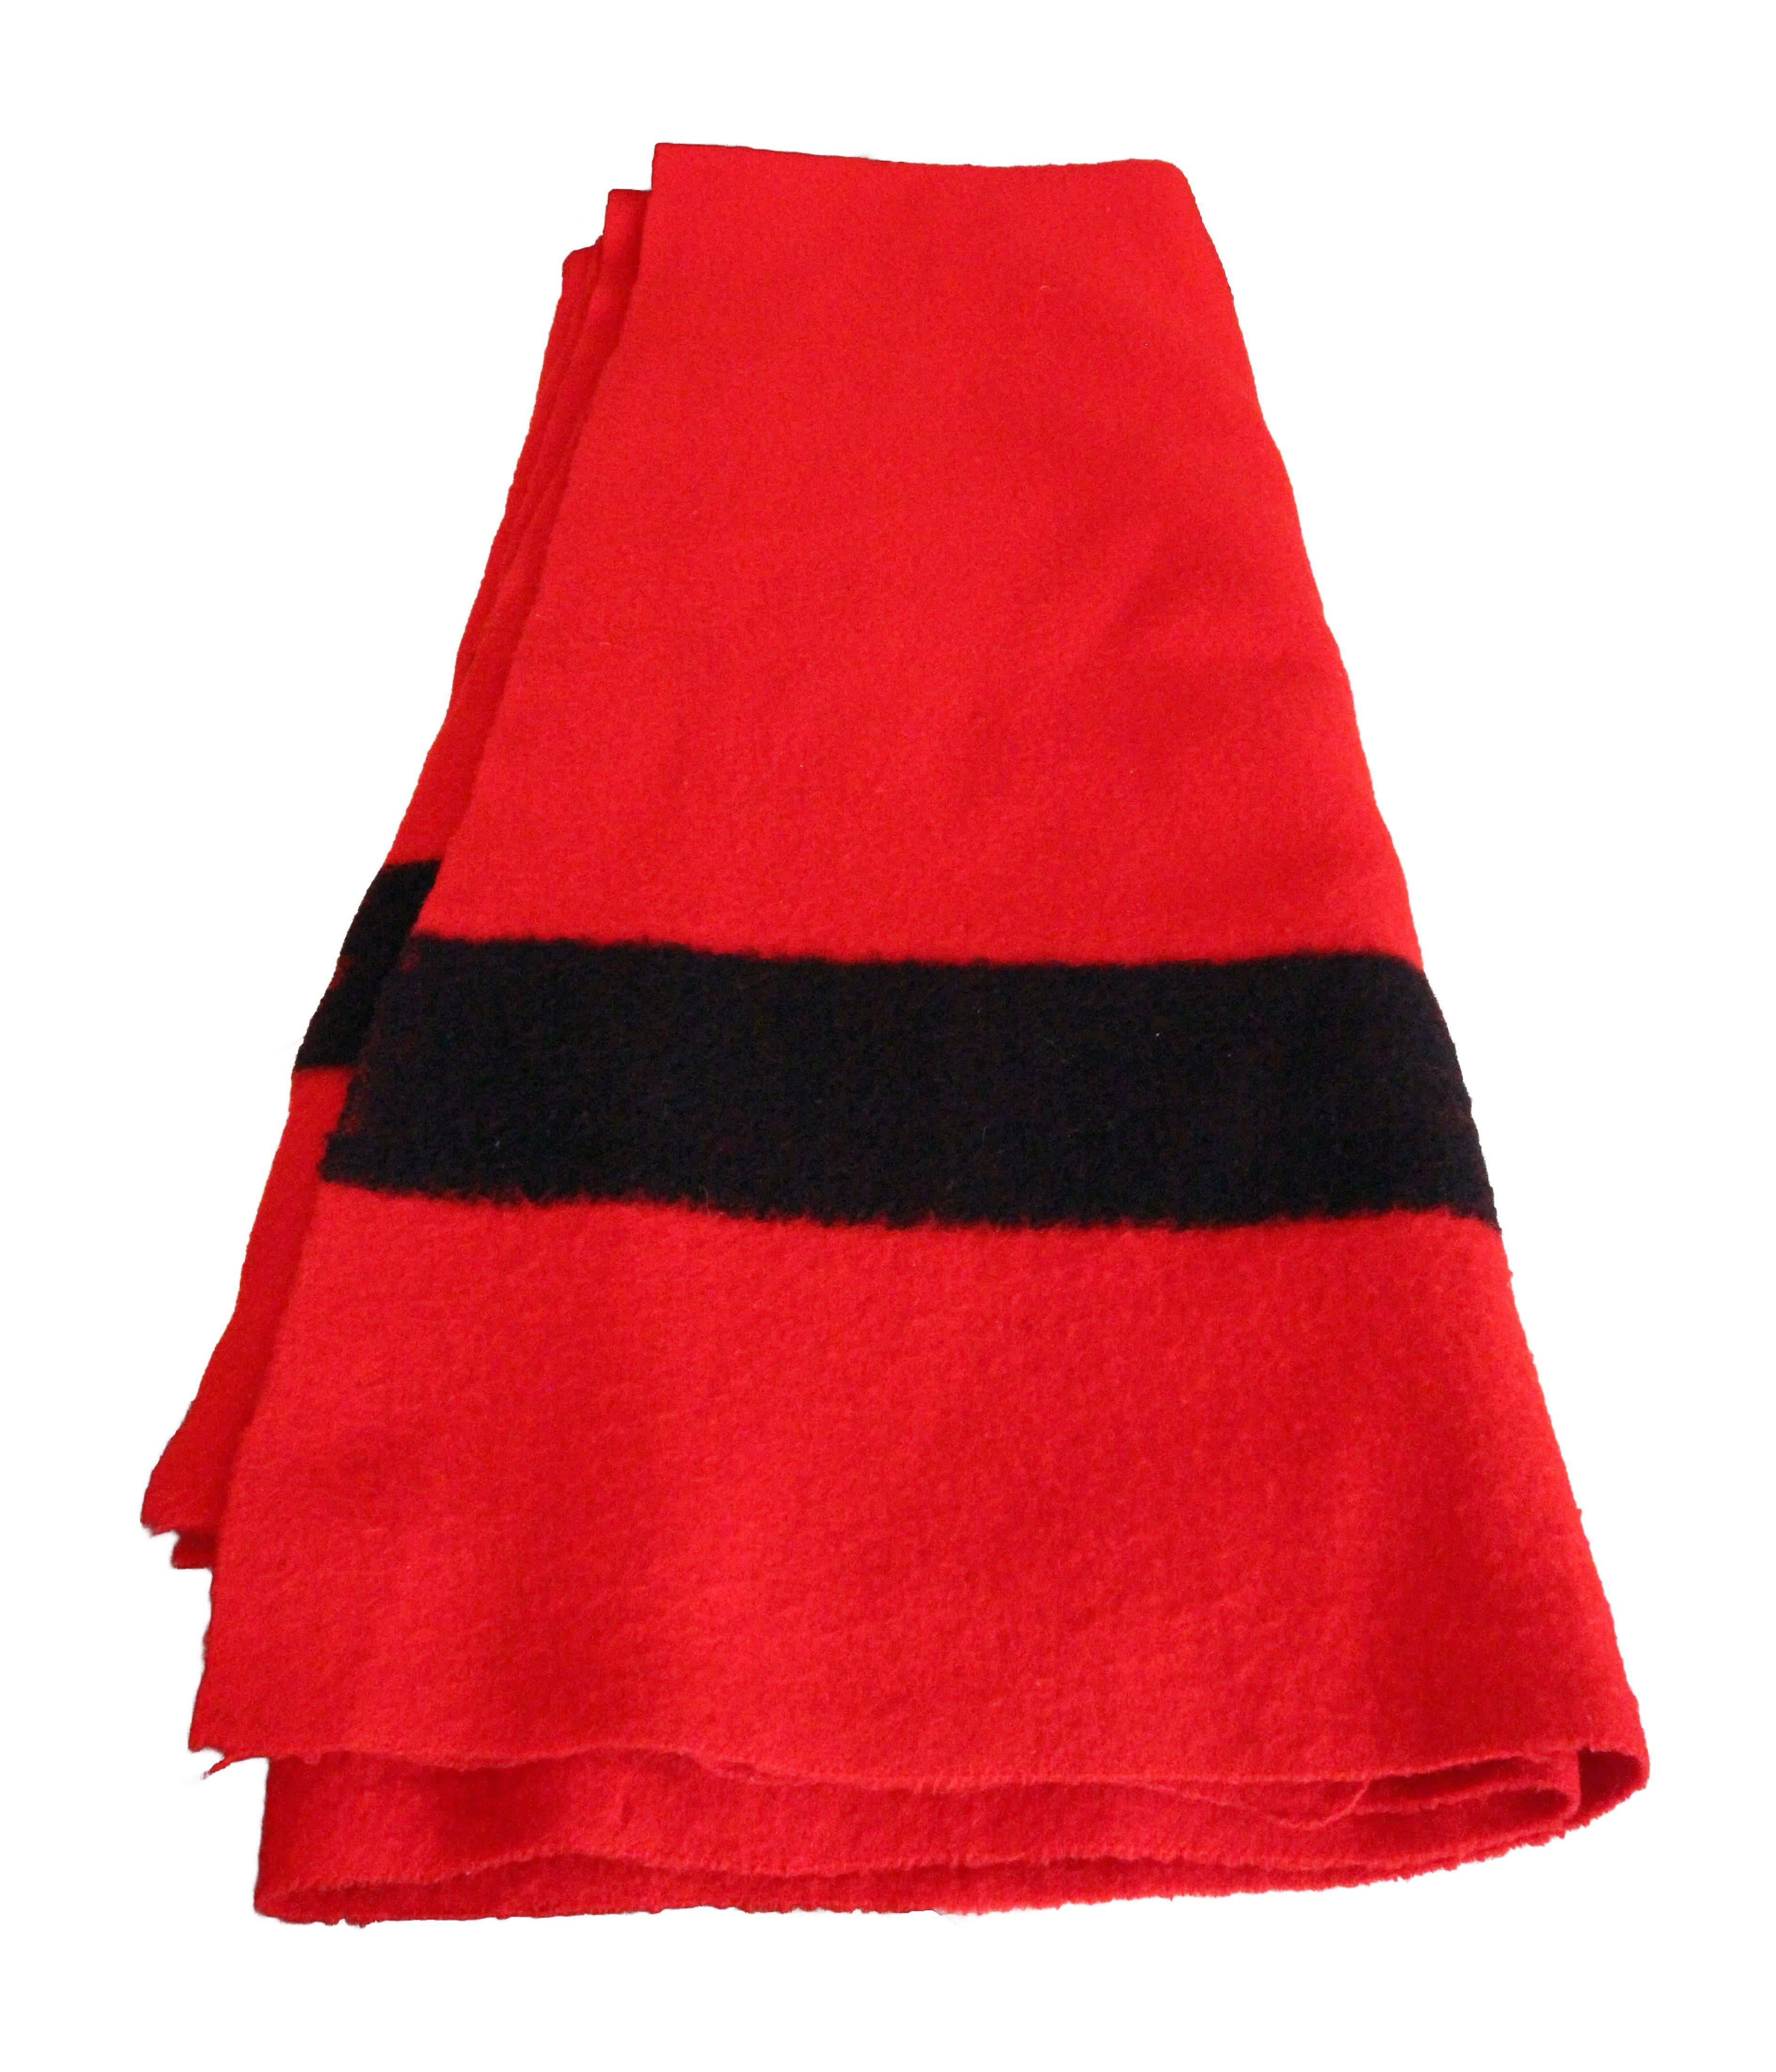 hudson bay red wool blanket